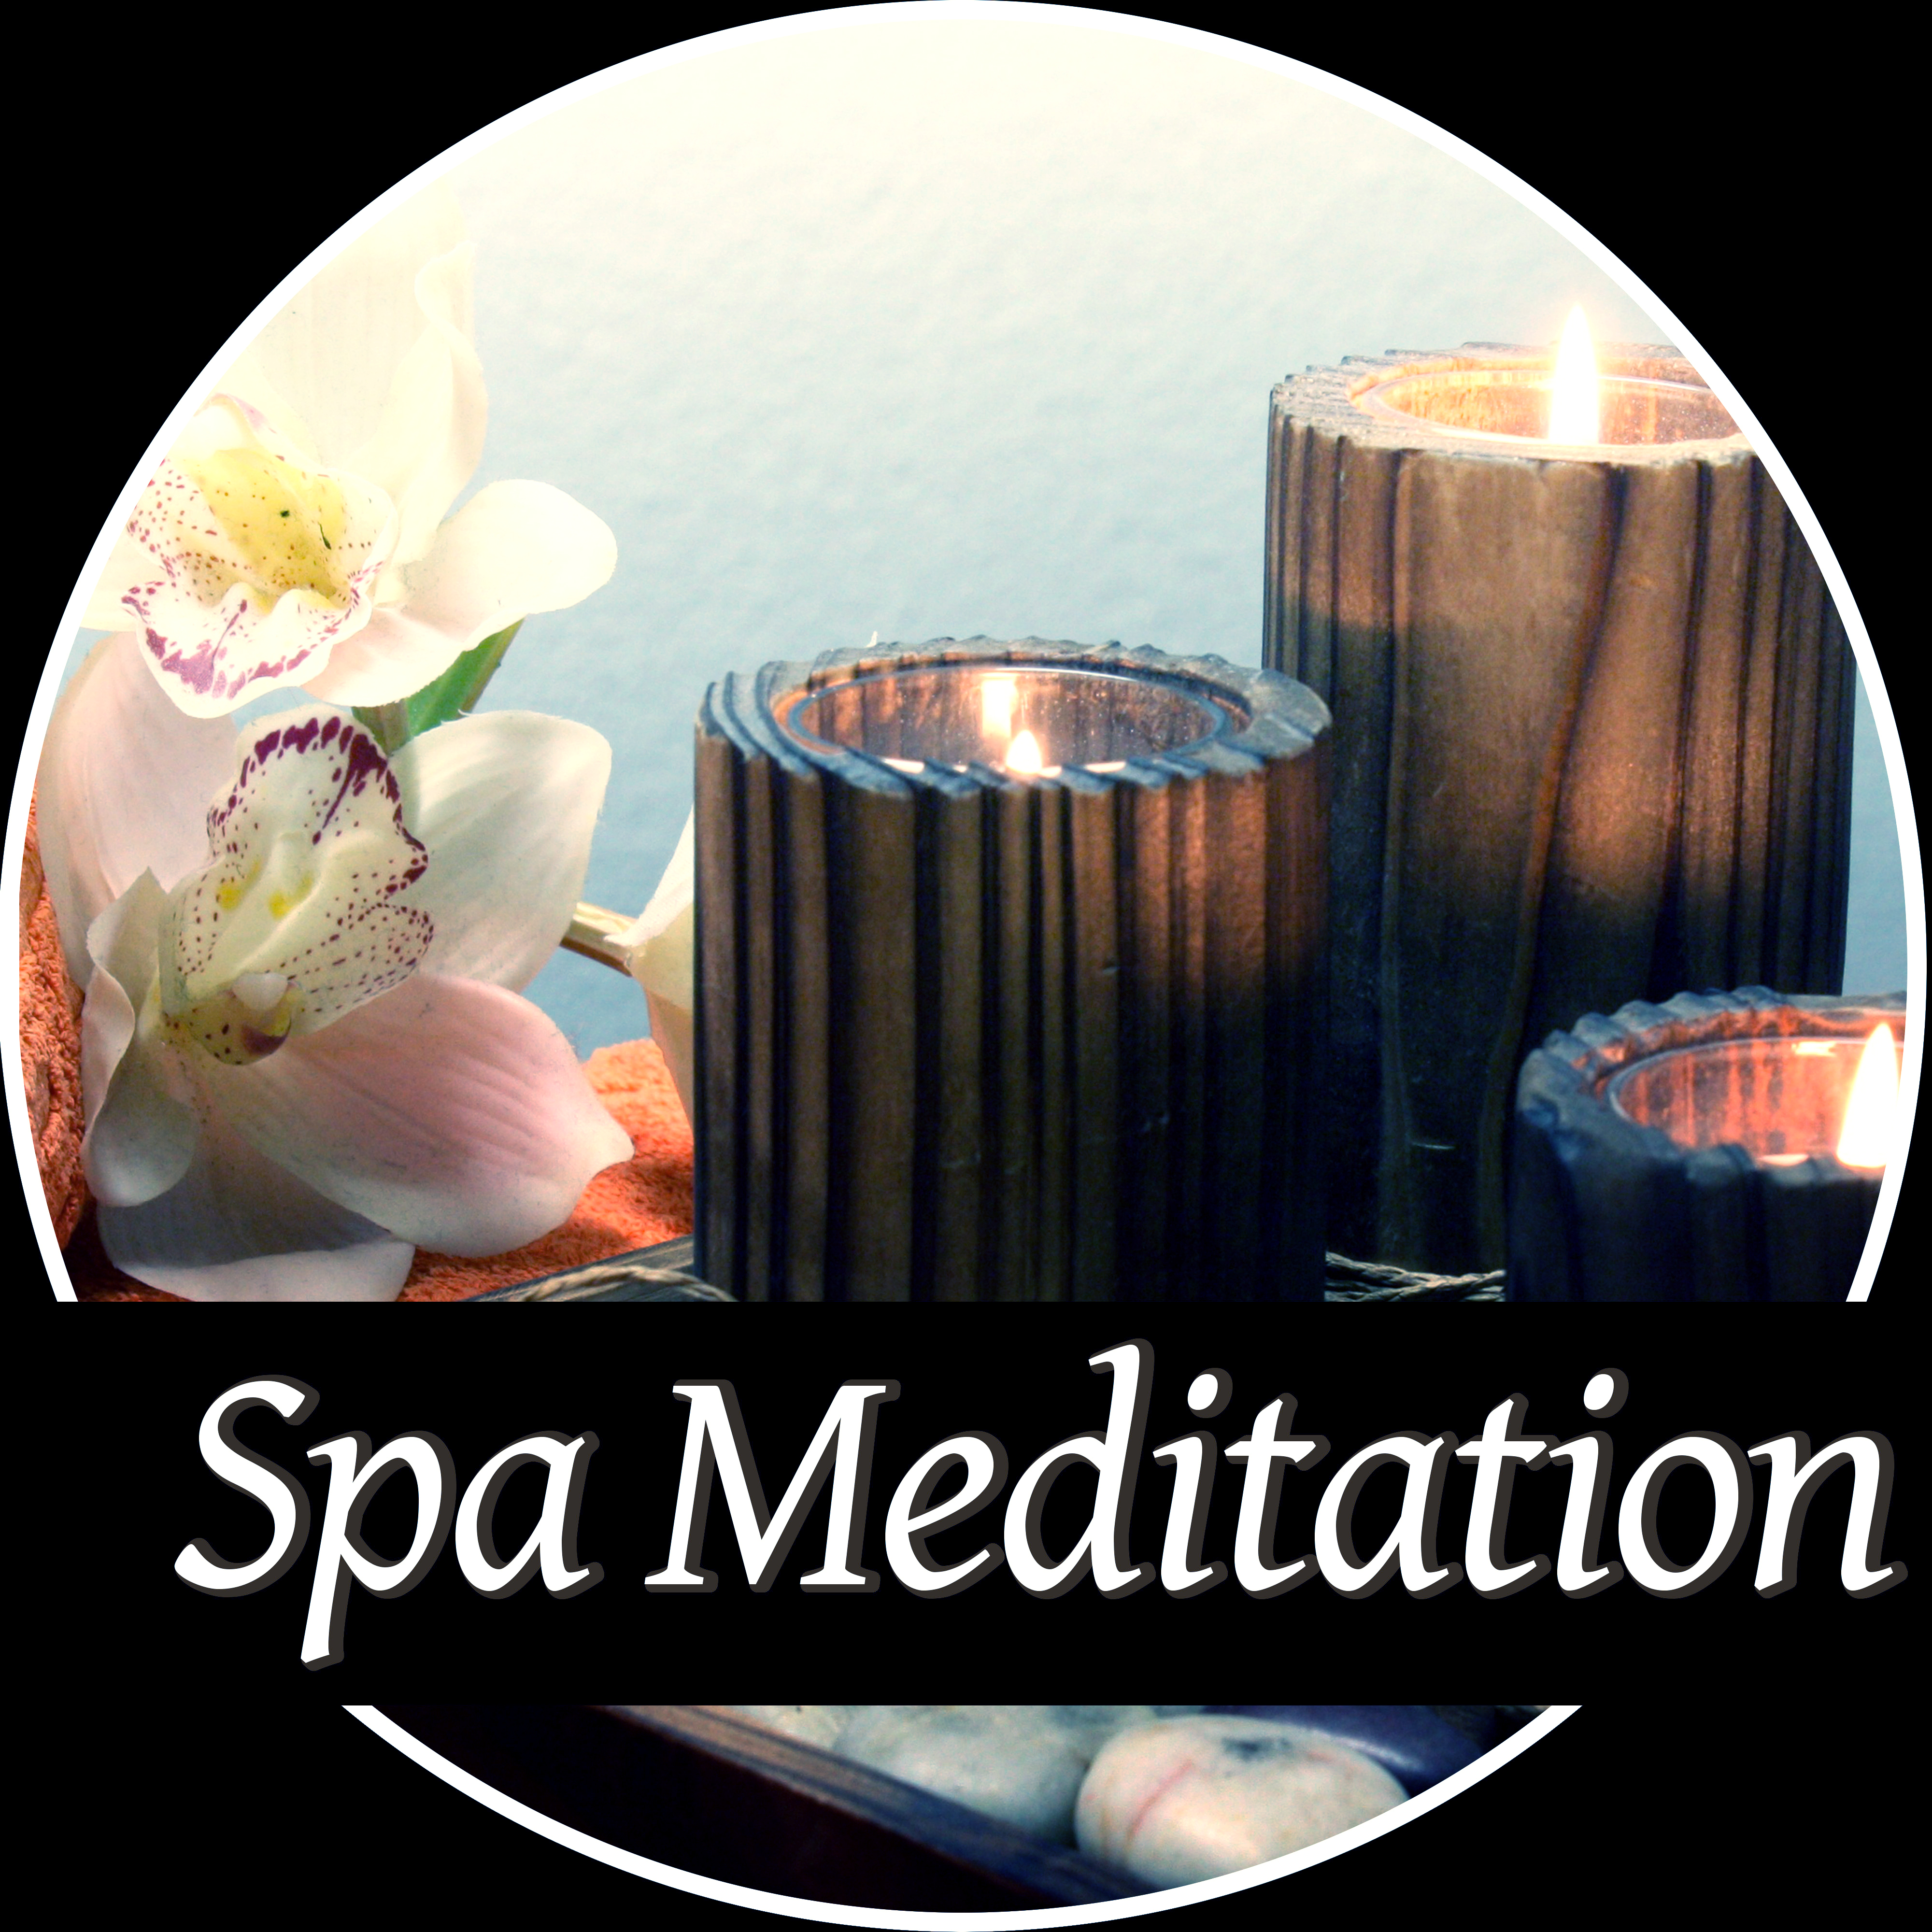 Spa Meditation – Healing Yoga Relaxation, Massage, Sleep Therapy, Spiritual Awakening, Reiki, Tai Chi, Ayurveda, Inner Peace, Asian Music